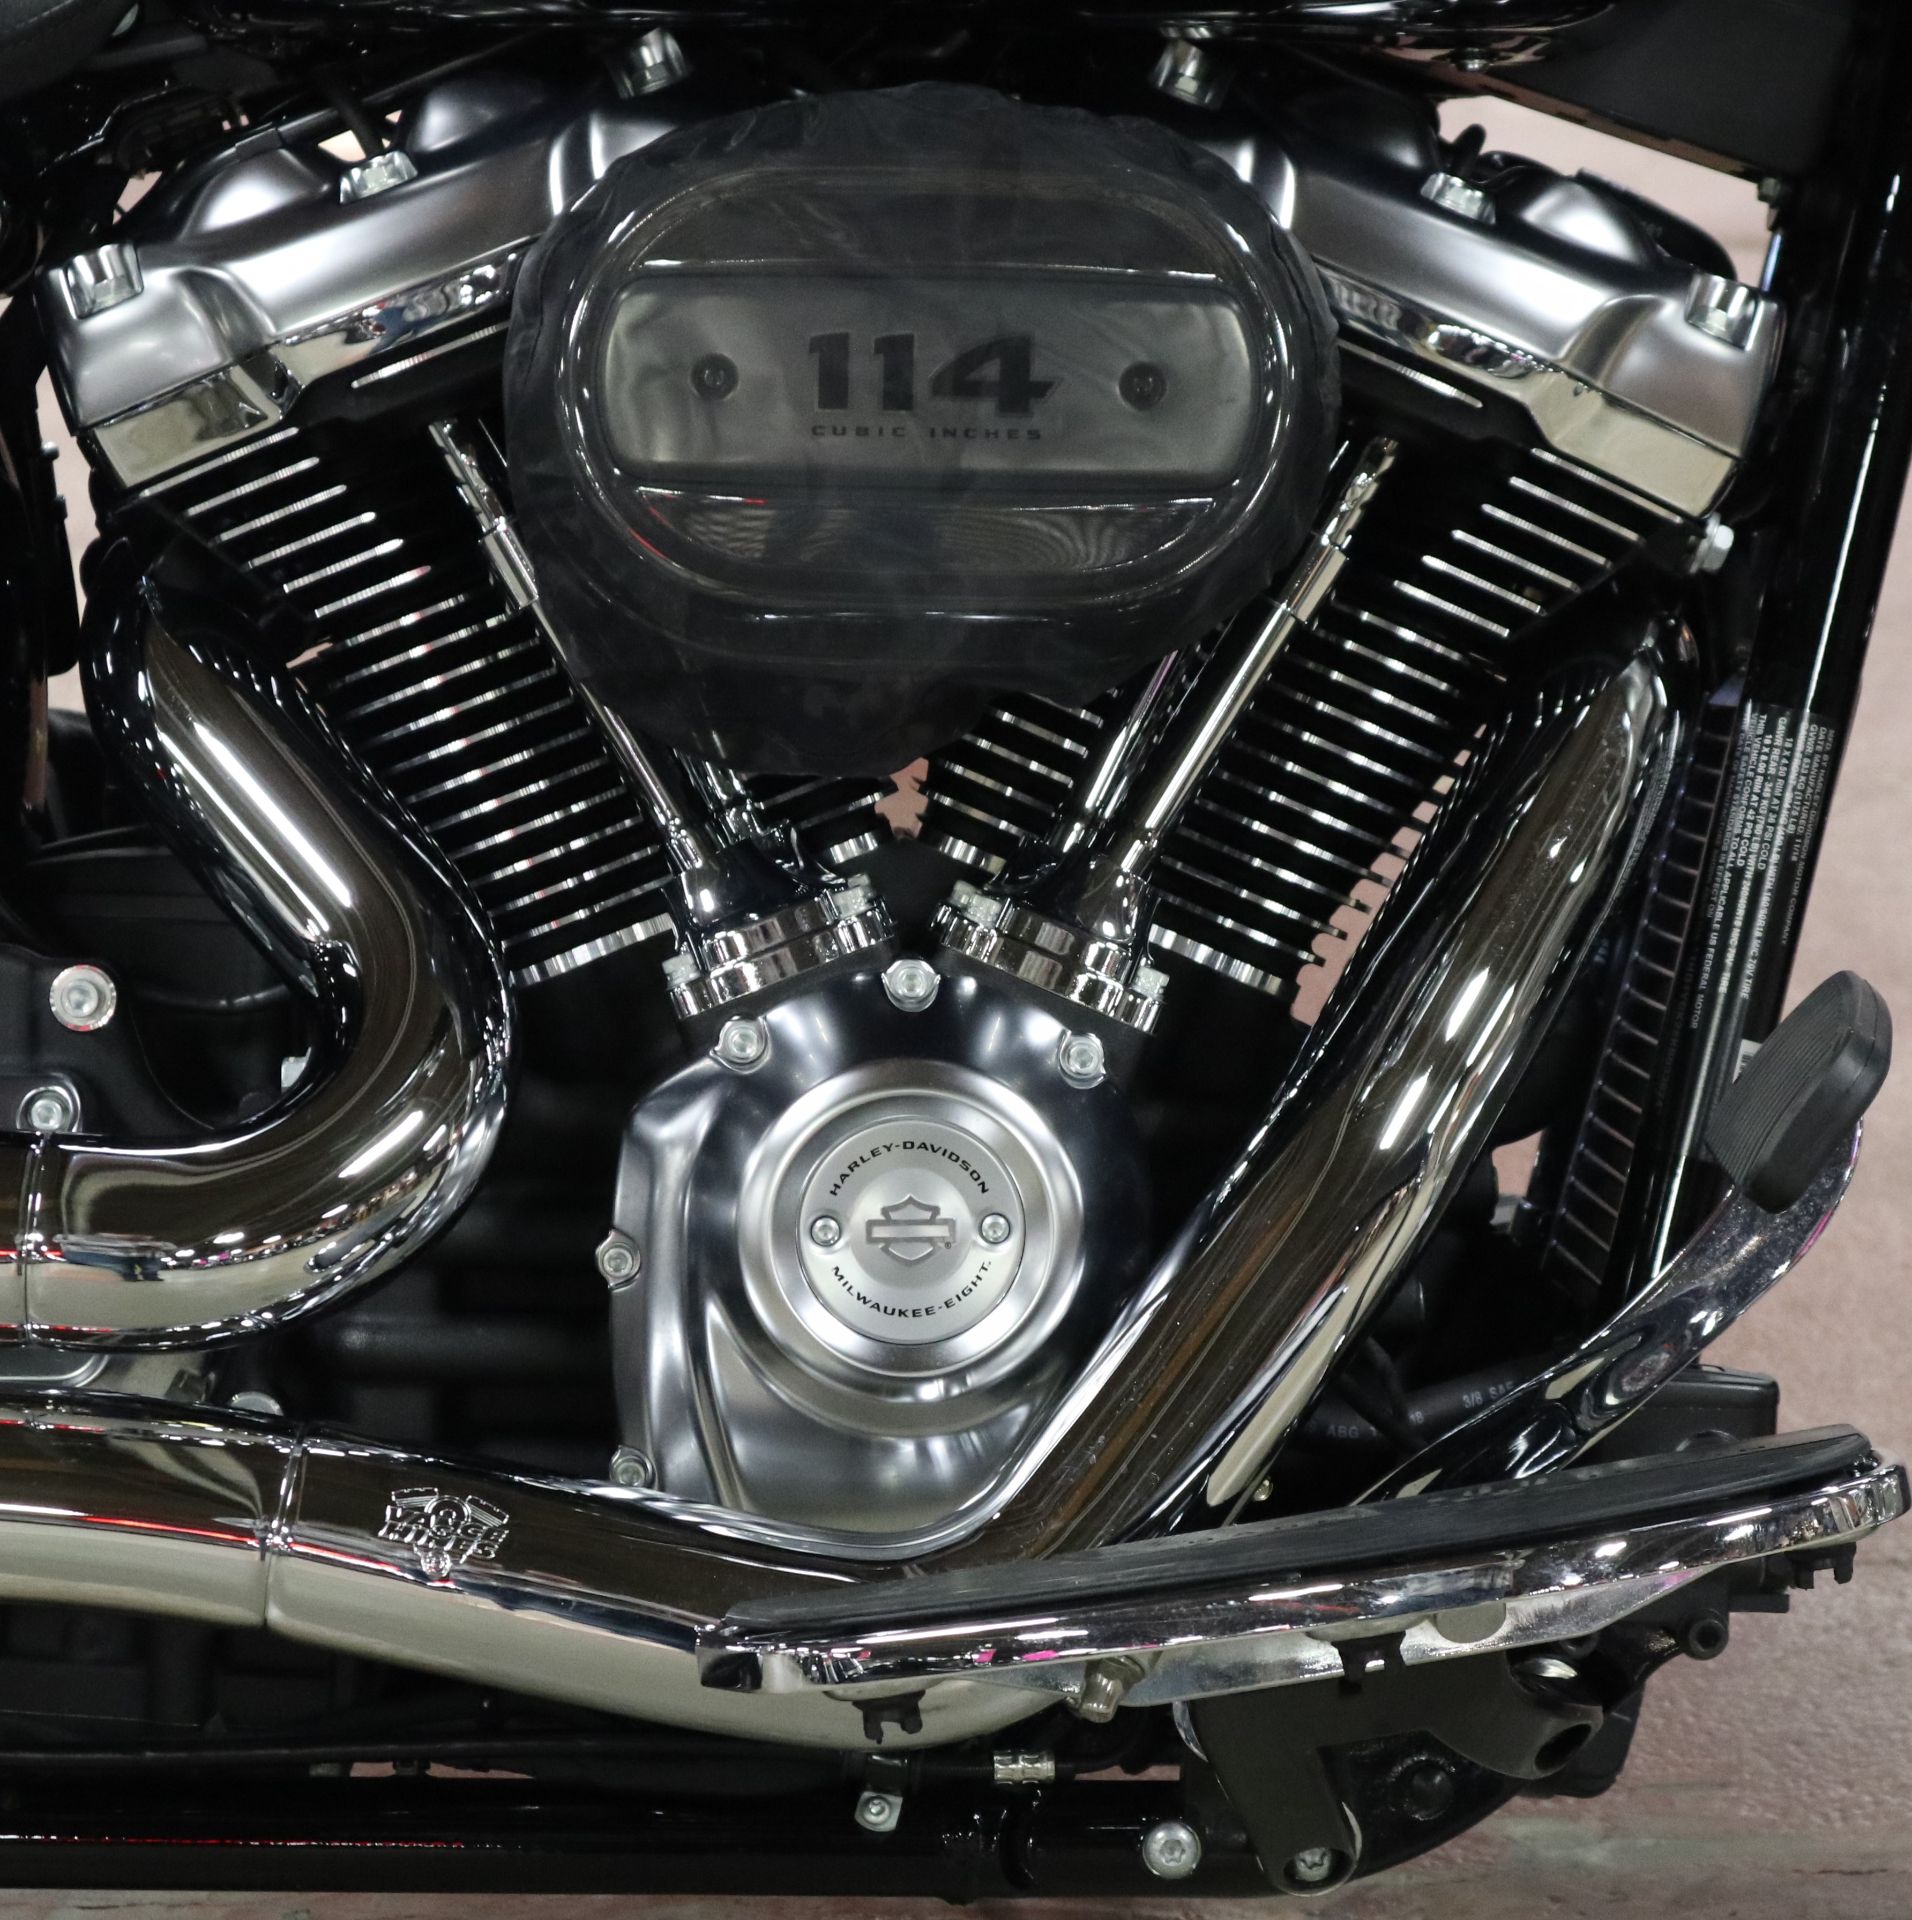 2019 Harley-Davidson Fat Boy® 114 in New London, Connecticut - Photo 15